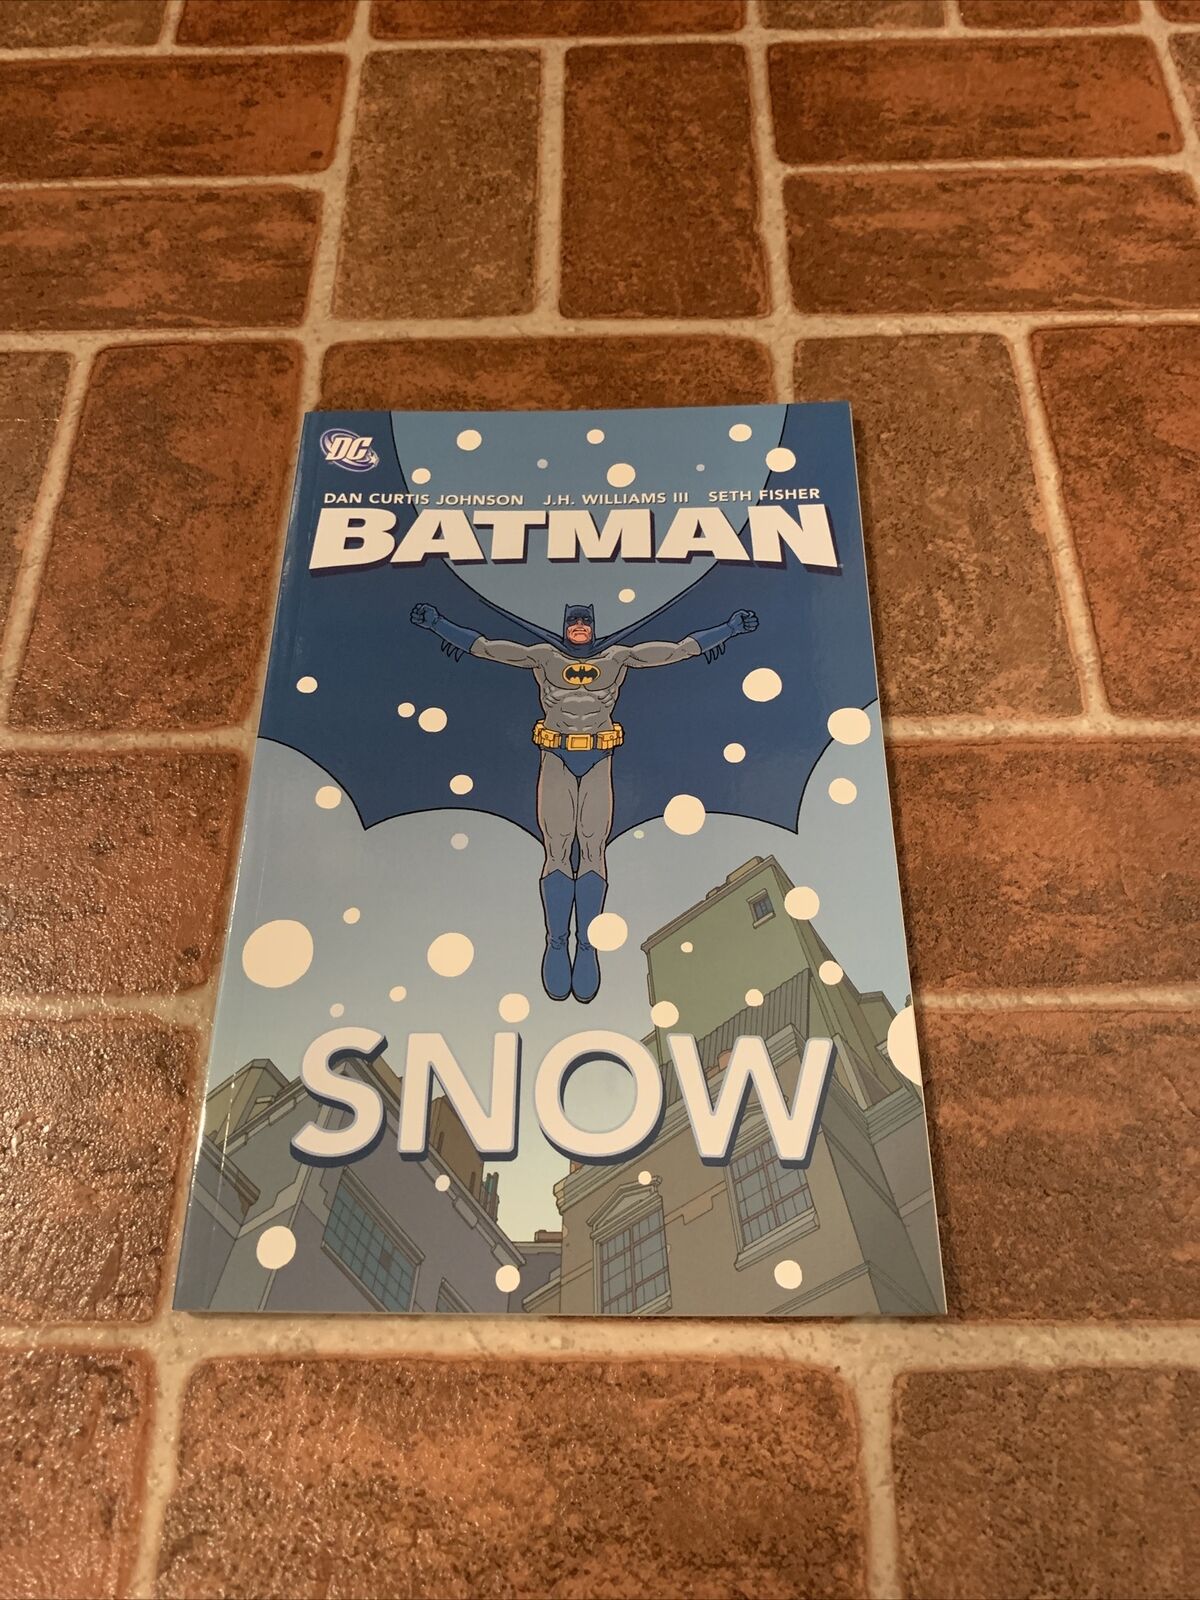 Batman Ser.: Snow by Dan Curtis Johnson (2007, Trade Paperback, Revised edition)